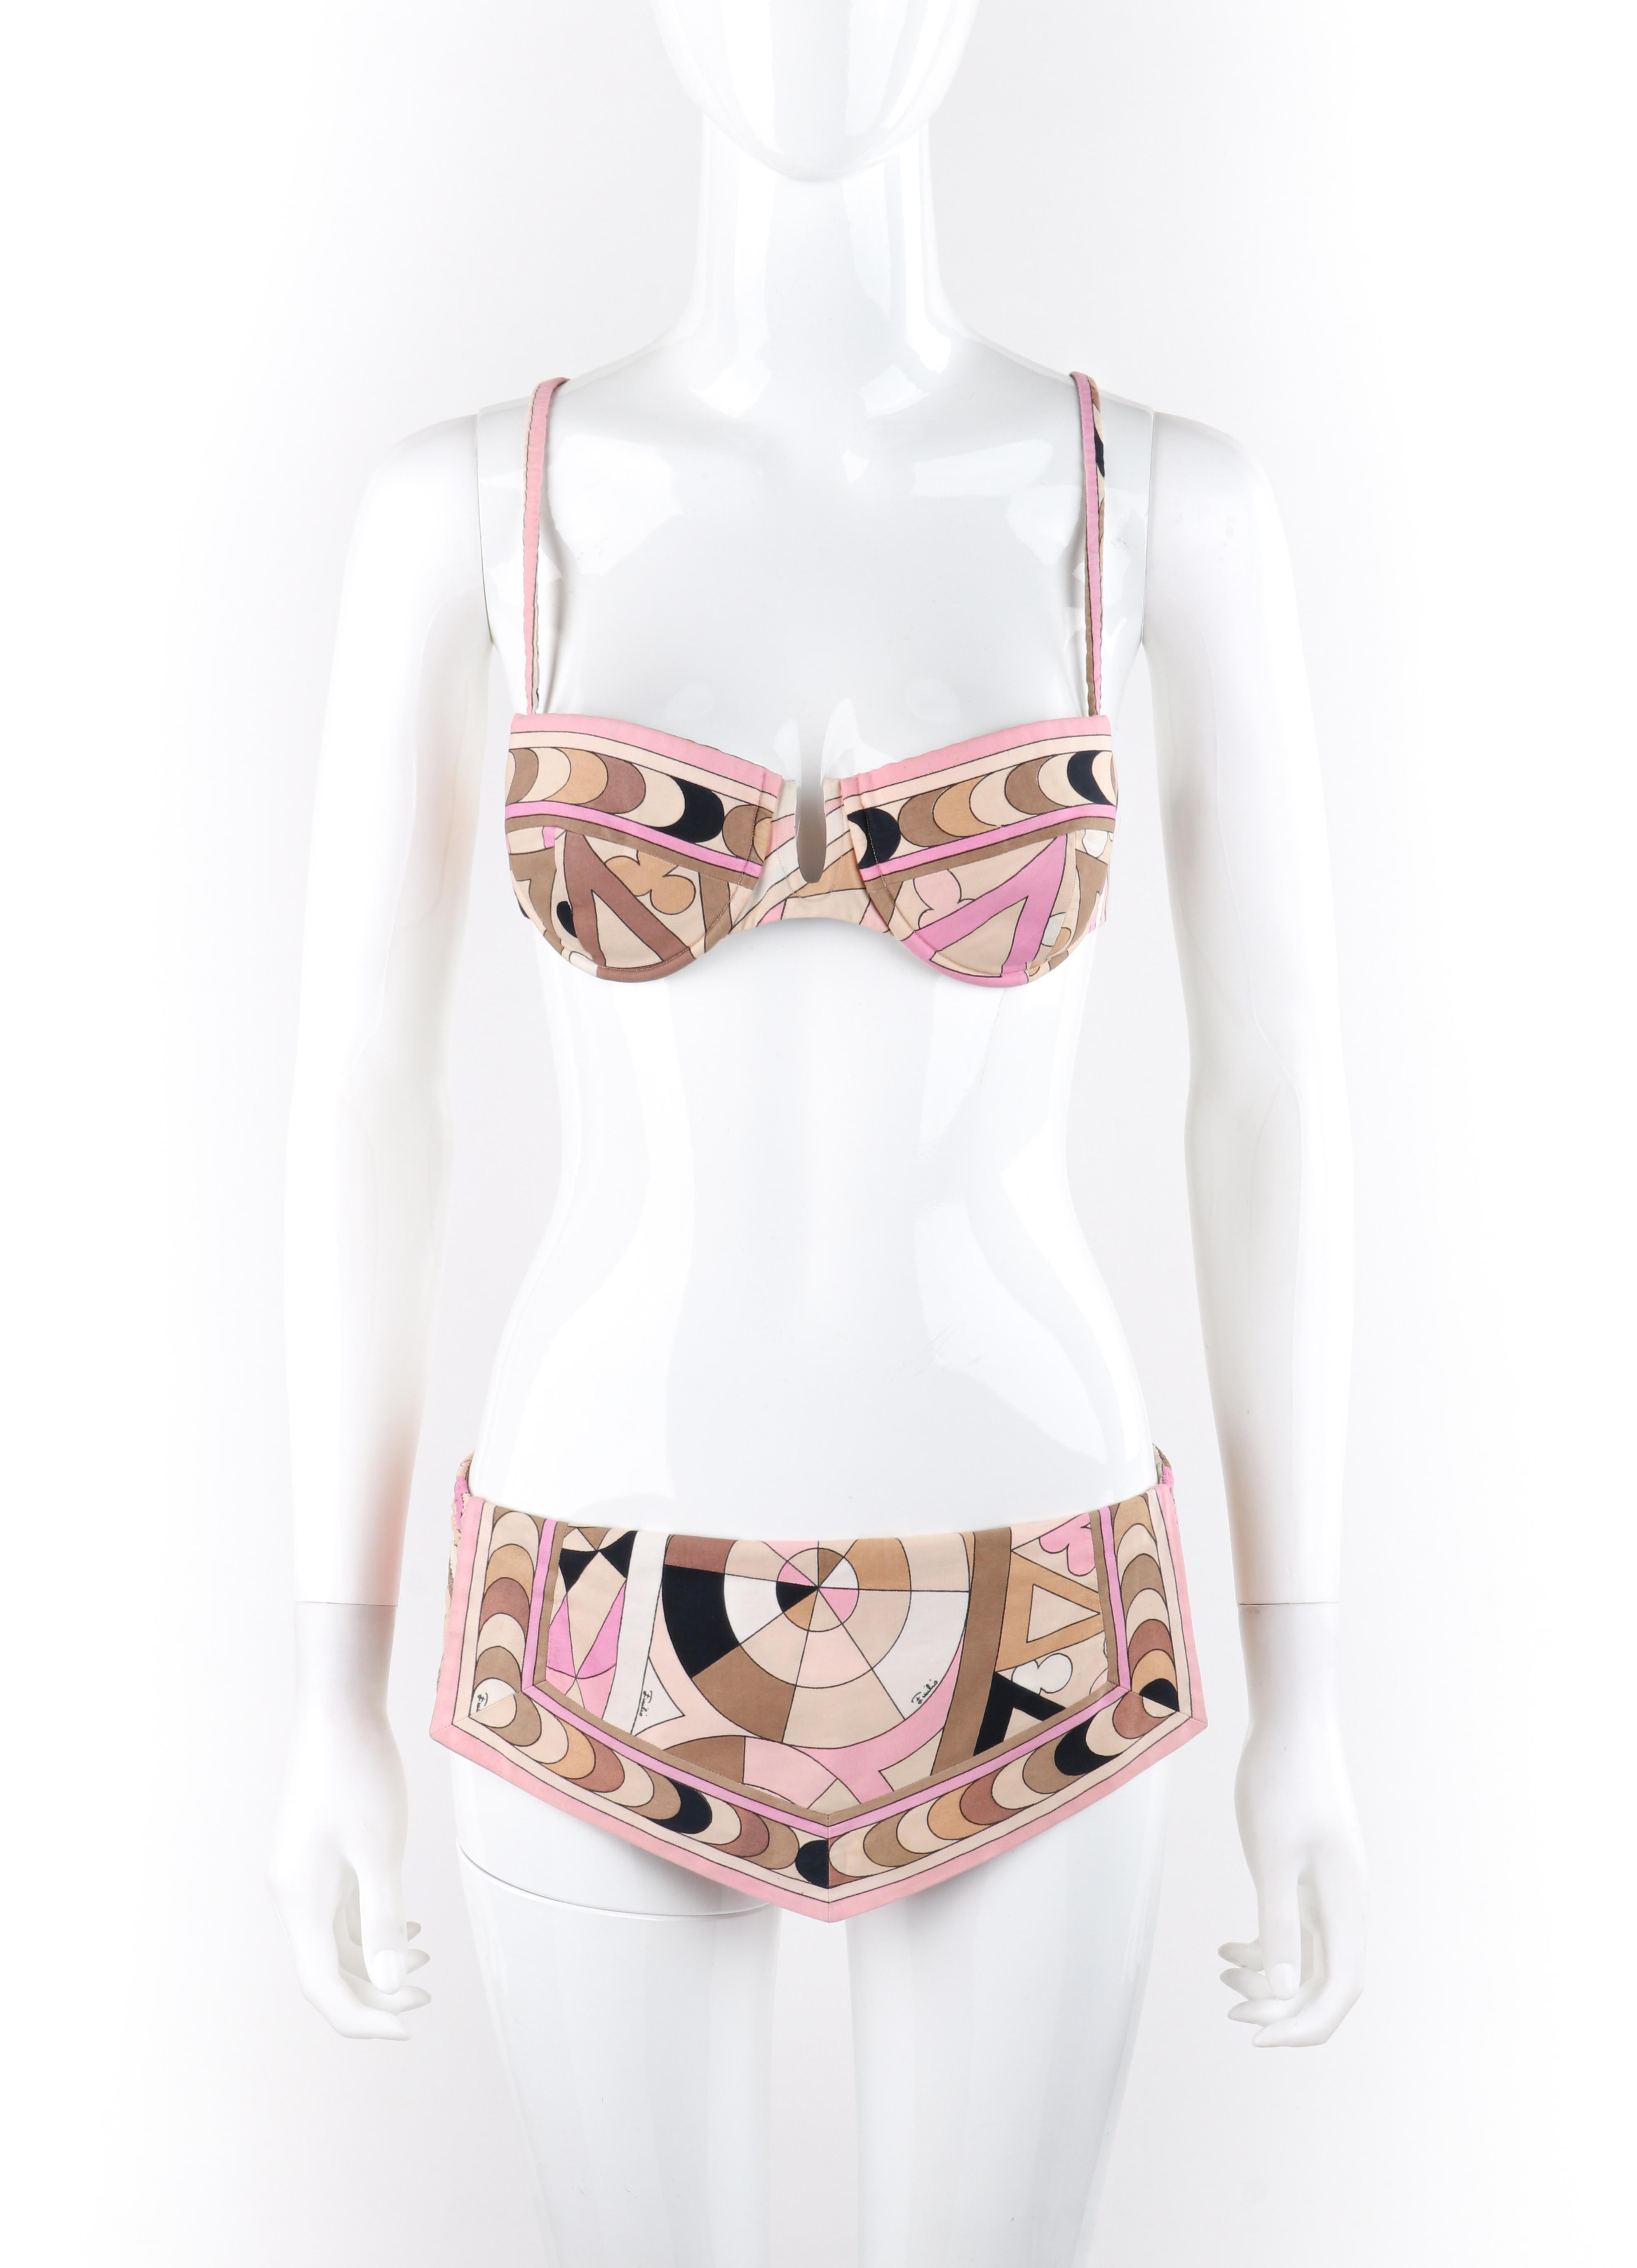 EMILIO PUCCI c.1960’s Multicolor Floral Geometric 2 Pc Bikini Bathing Swimsuit
Circa: 1960’s 
Label(s): Emilio Pucci, Exclusively for Saks Fifth Avenue 
Designer: Emilio Pucci
Style: Bikini 
Color(s): Shades of pink, tan, white, black, brown,